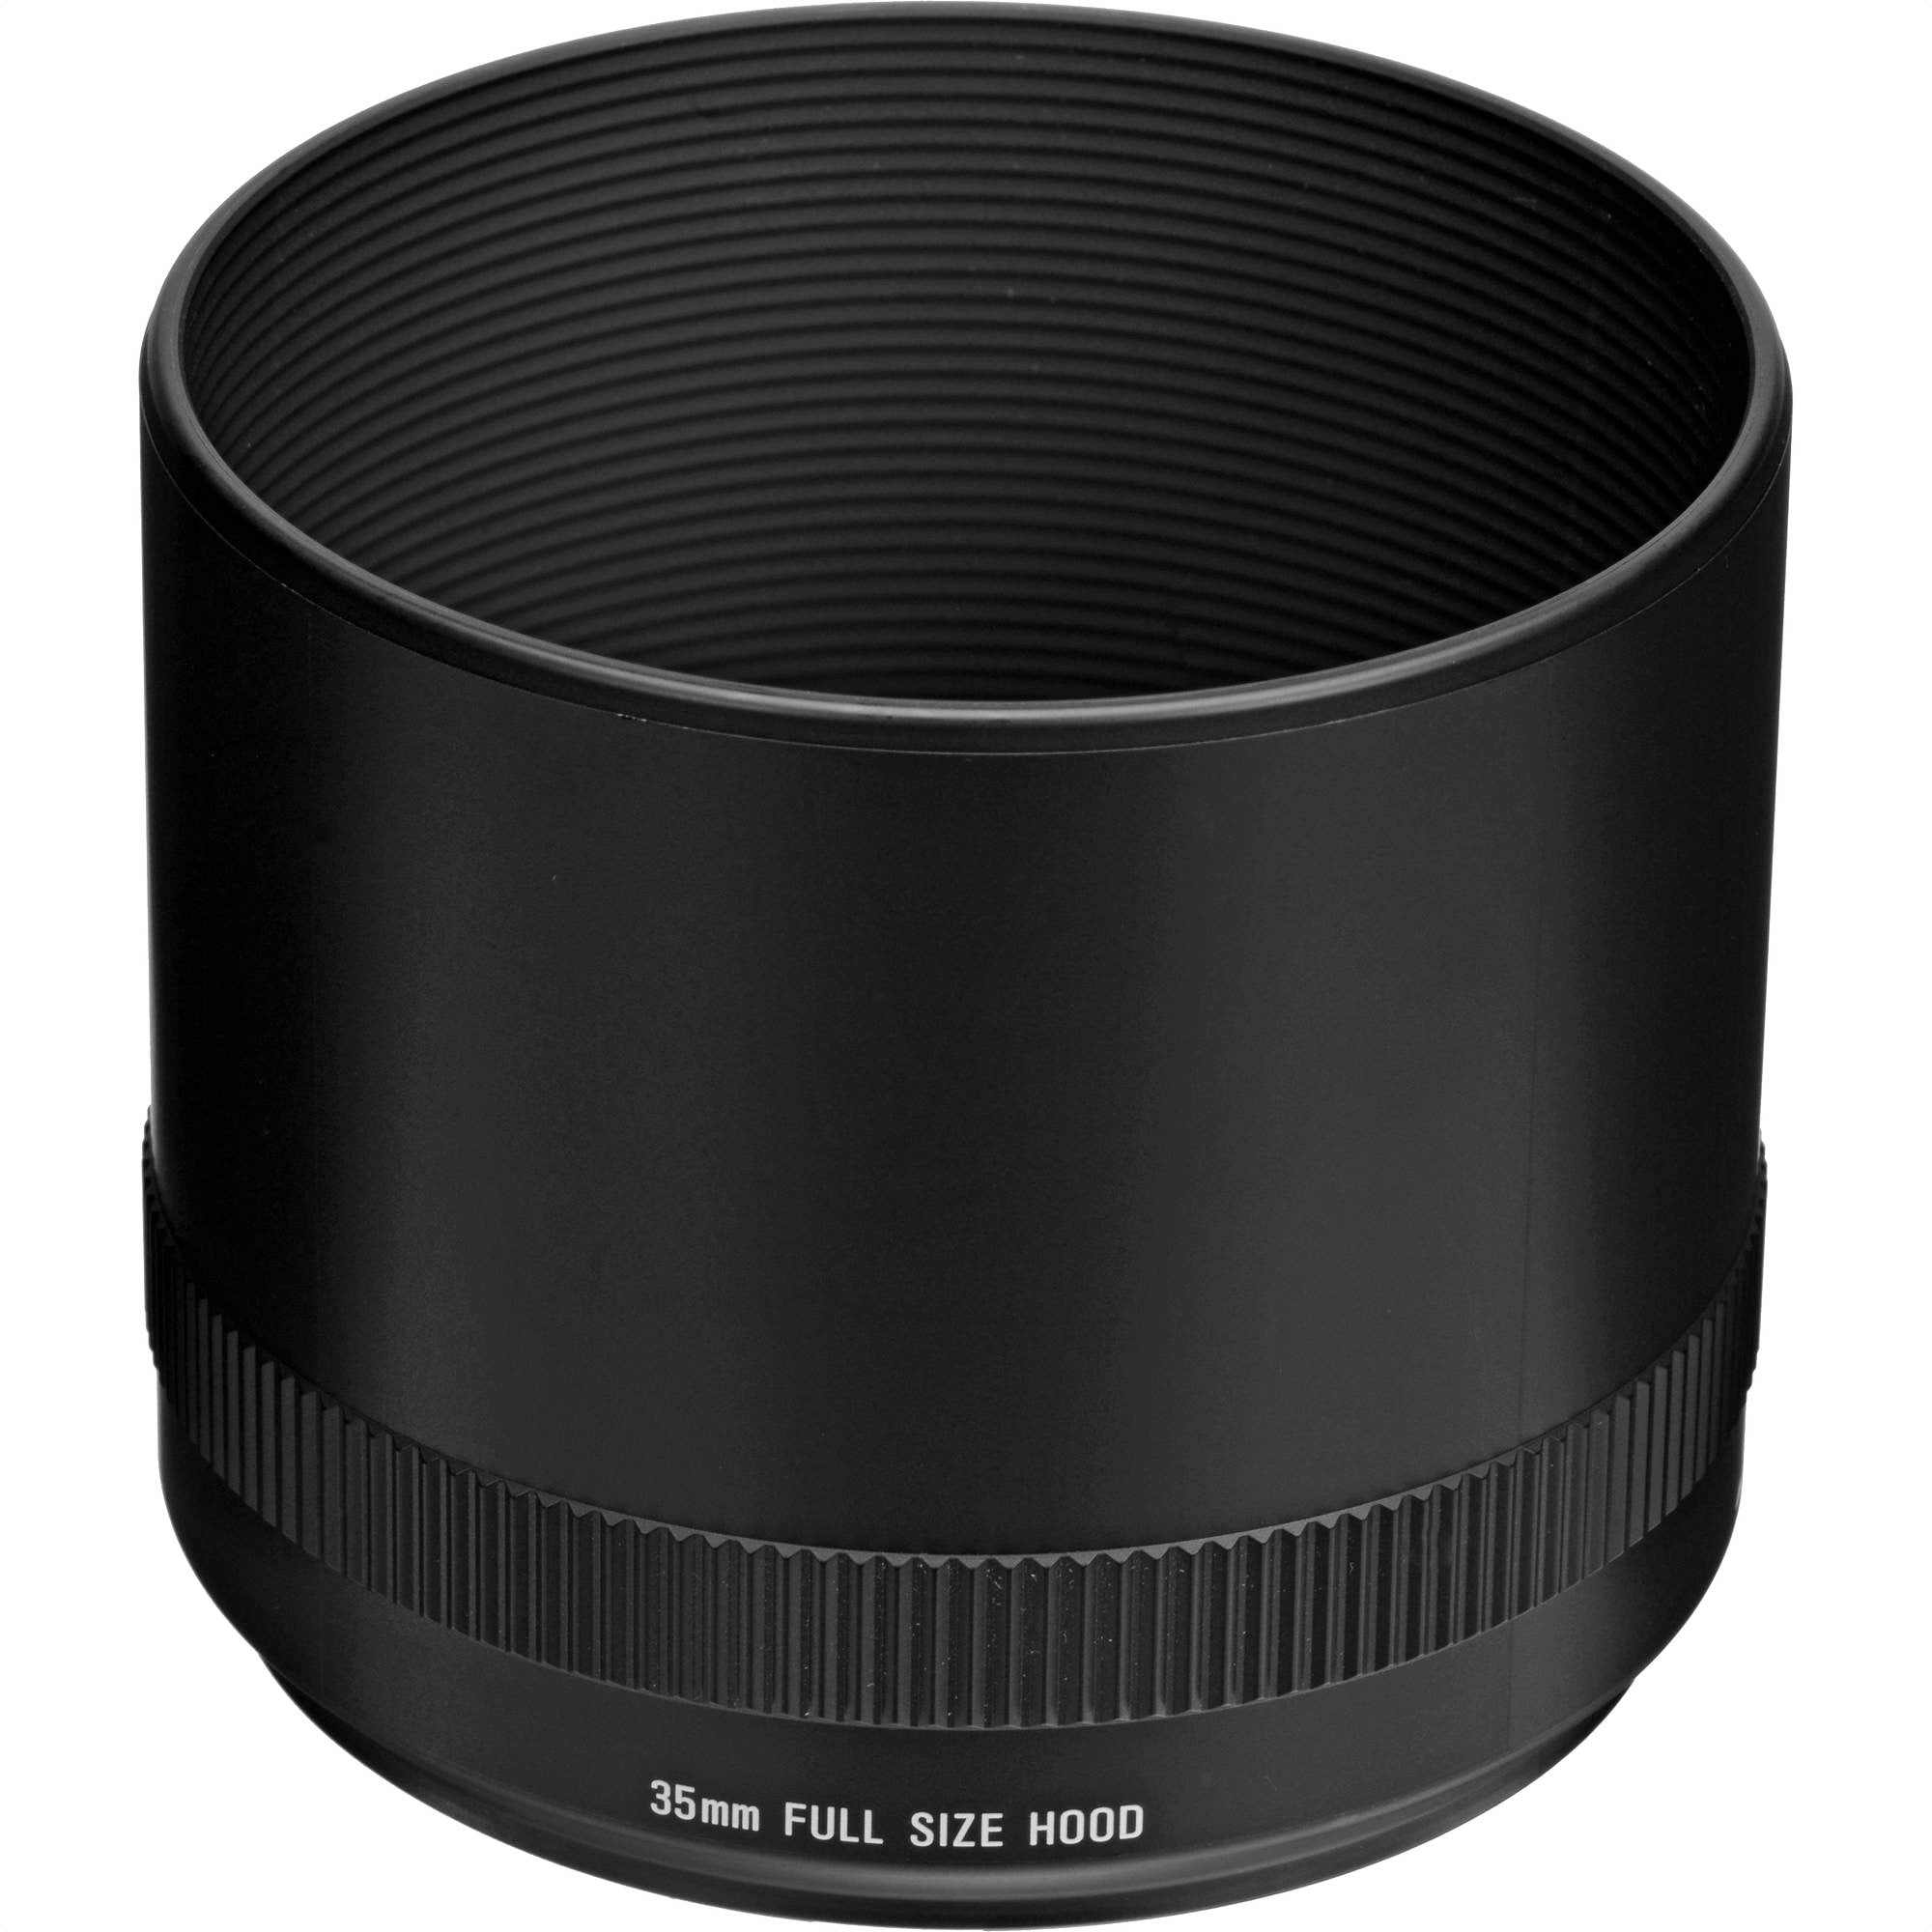 Sigma Lens Hood for 300mm F2.8 EX APO Digital HSM Lens